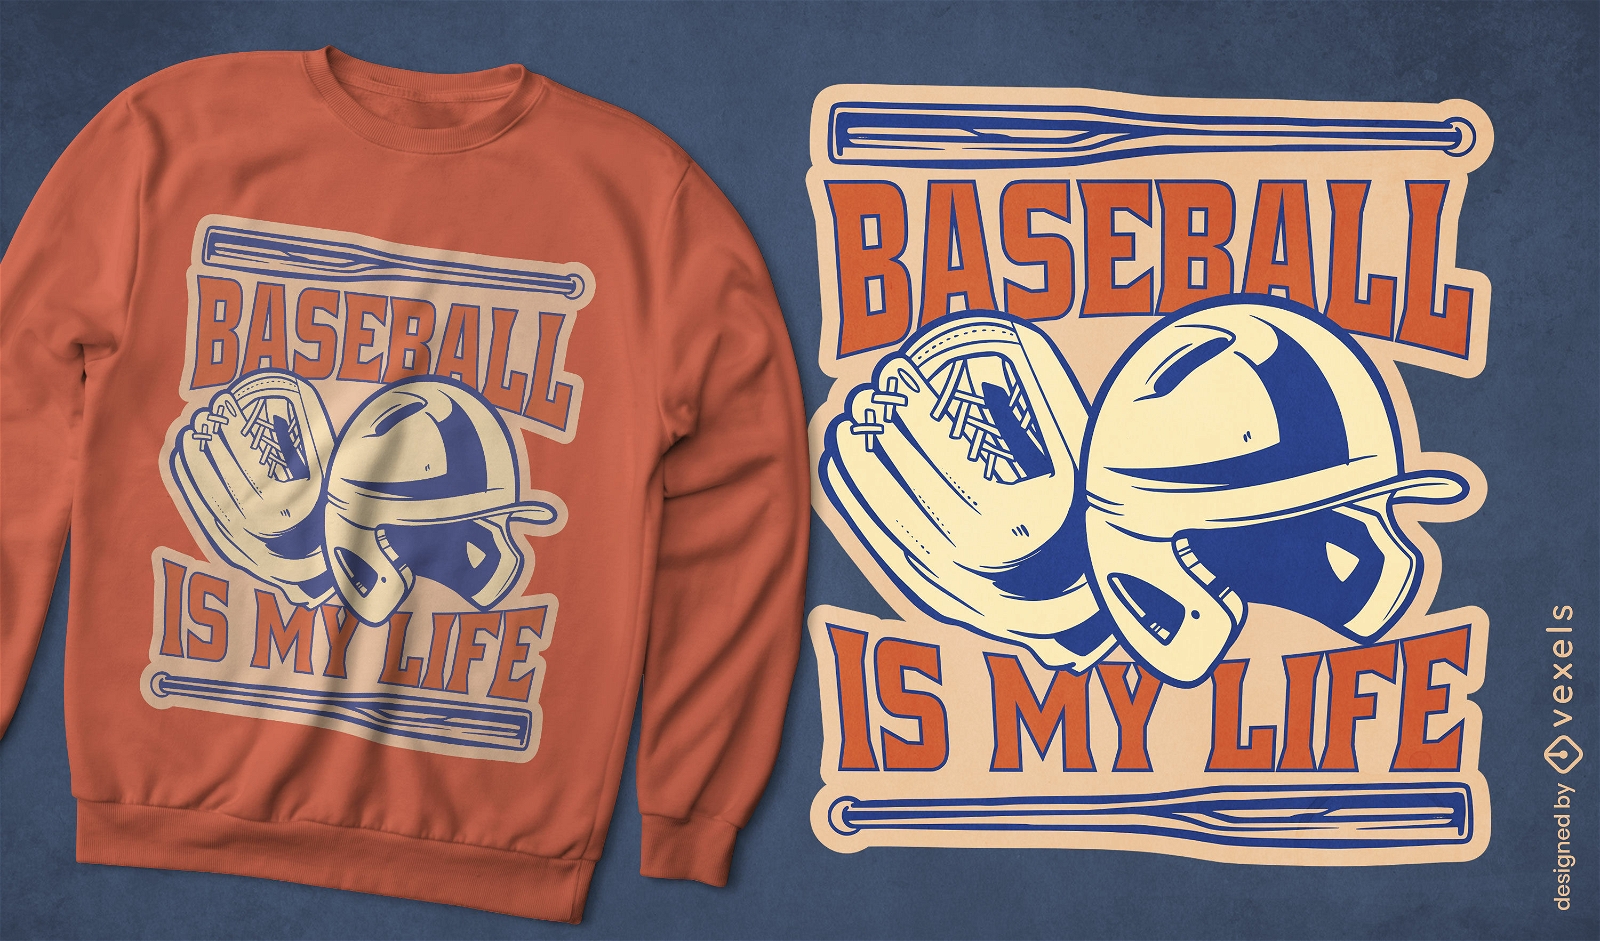 I Love Baseball - Vintage Baseball Shirt Design' Kids' T-Shirt